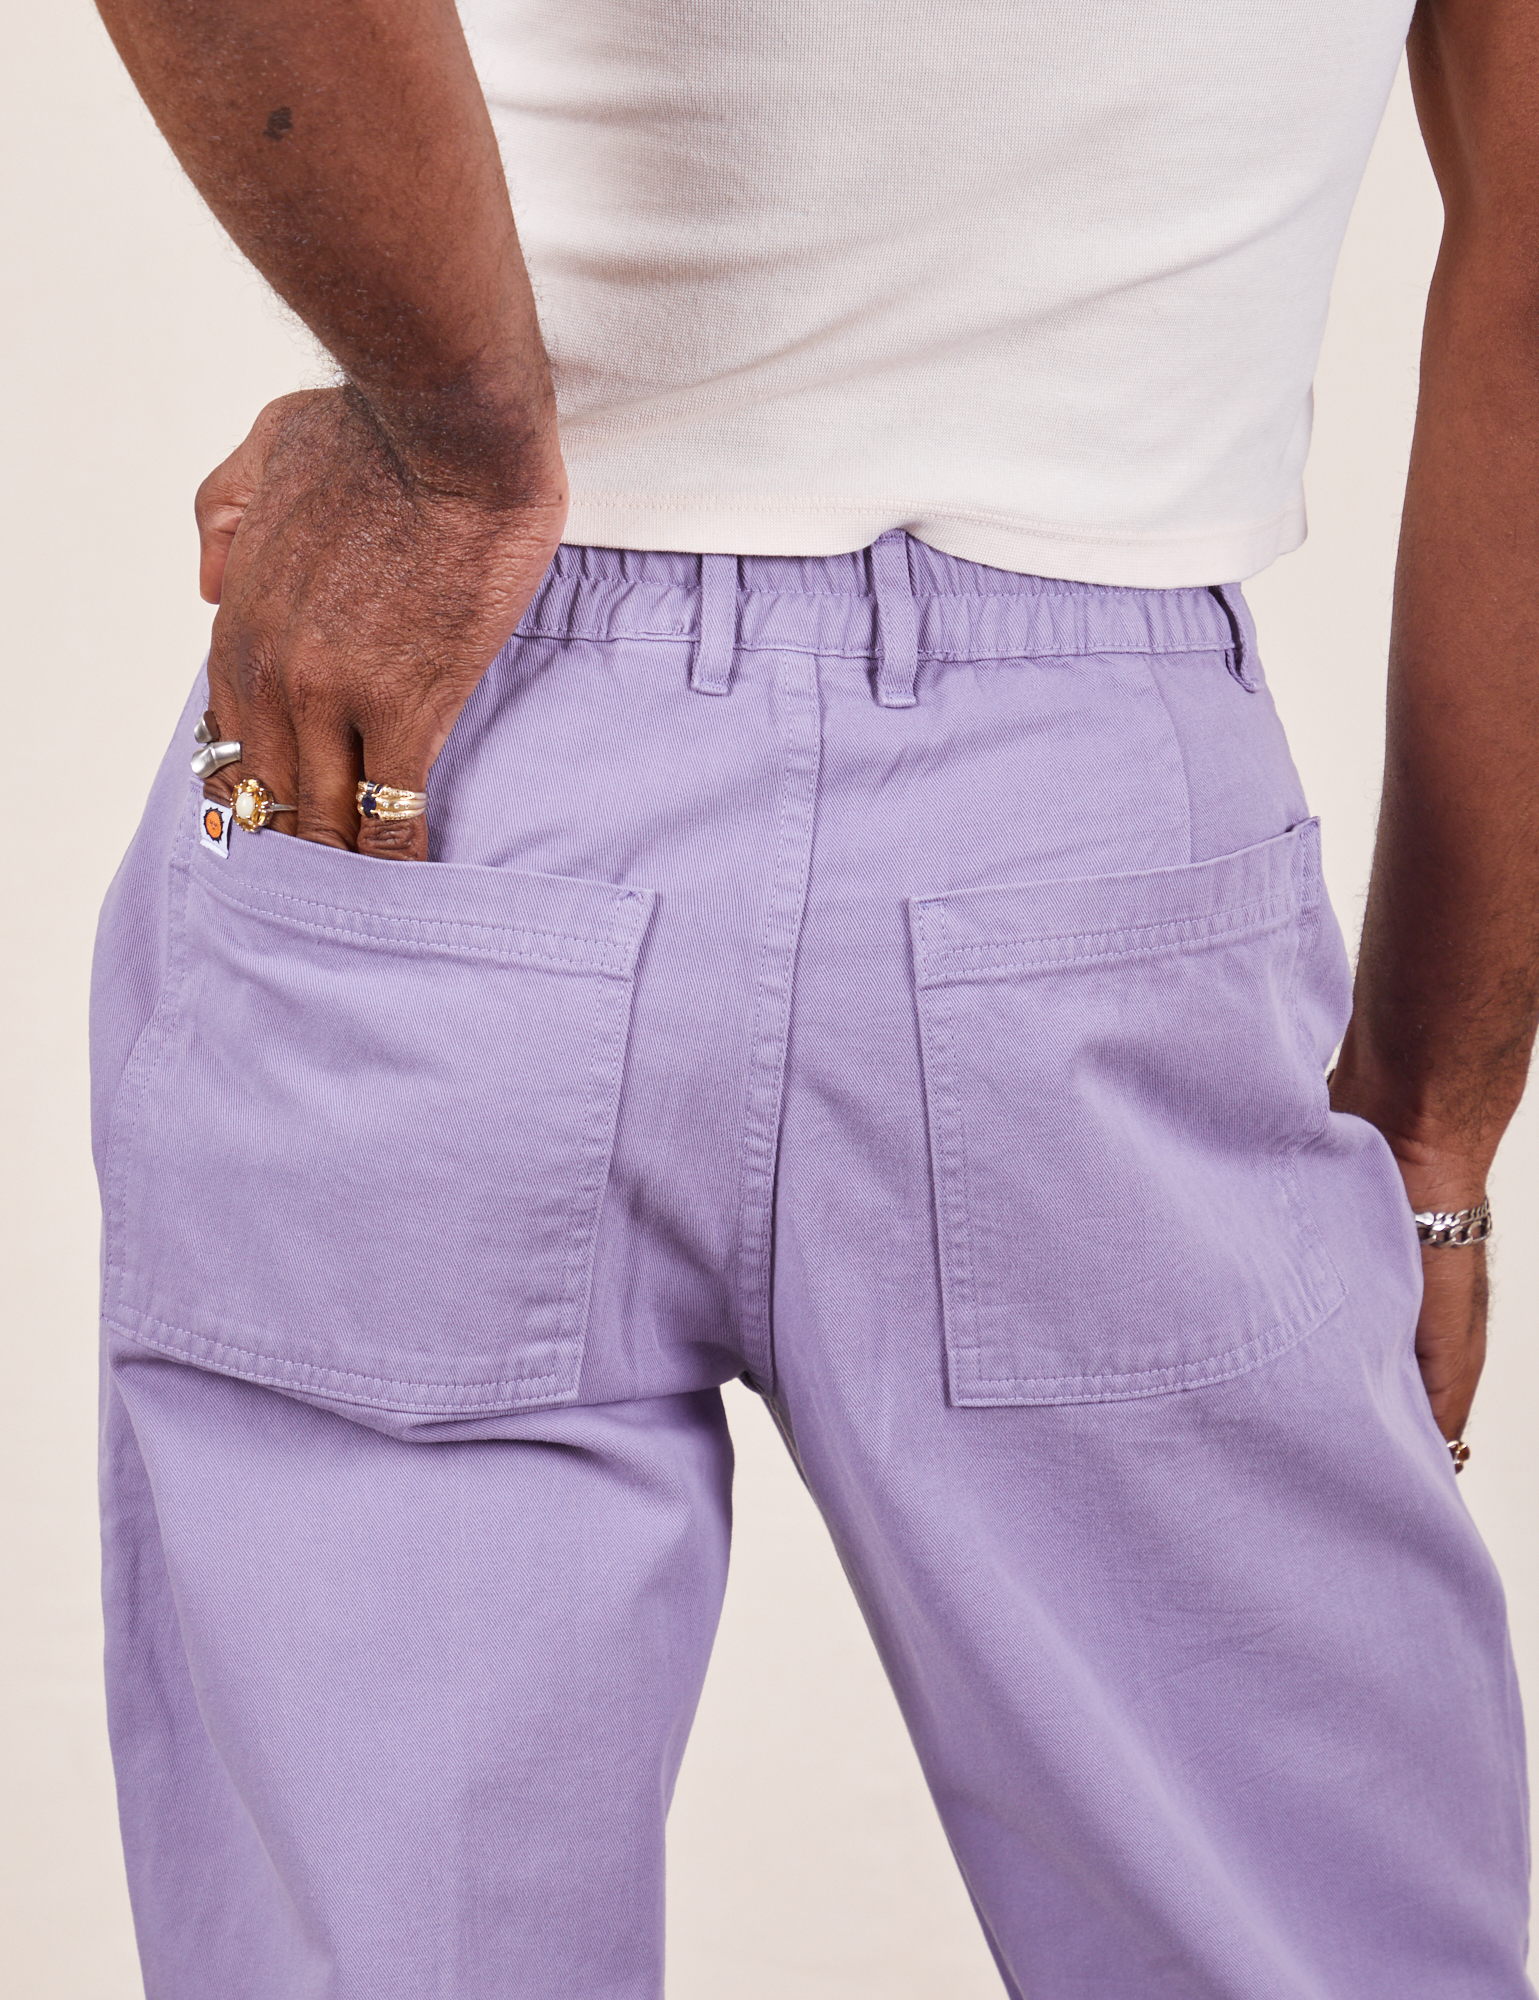 Western Pants in Faded Grape back close up on Jerrod